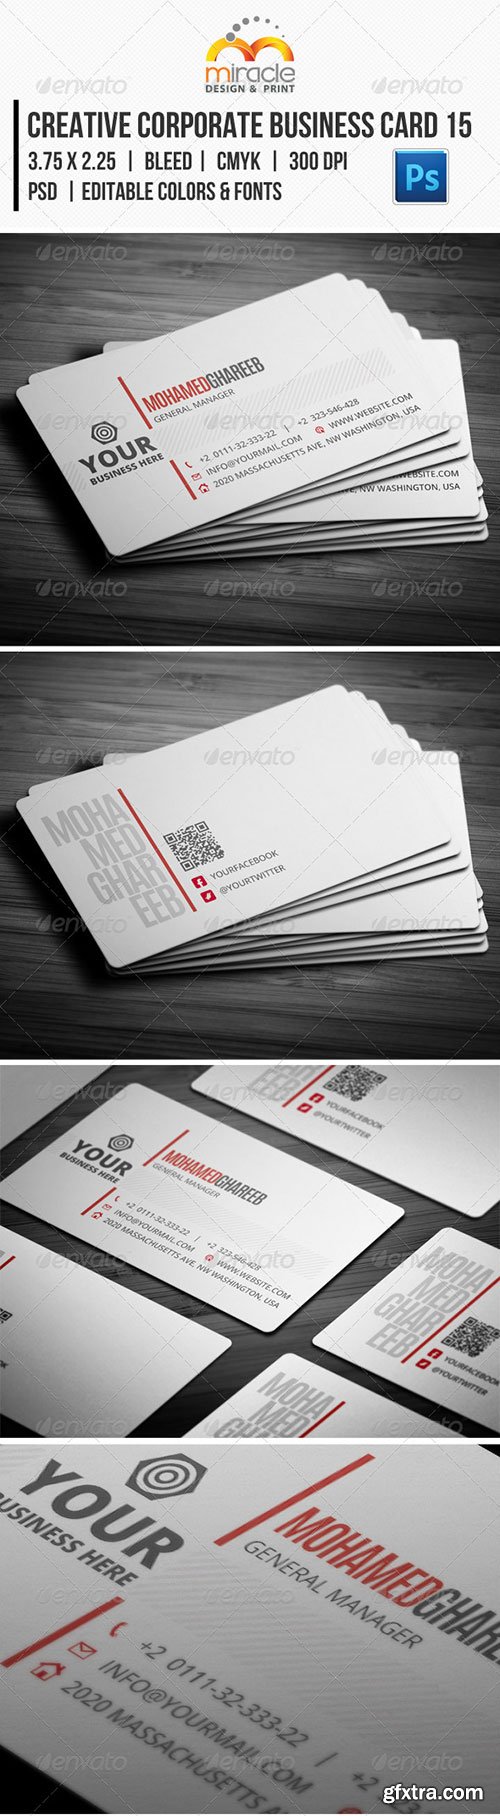 GraphicRiver - Creative Corporate Business Card 15